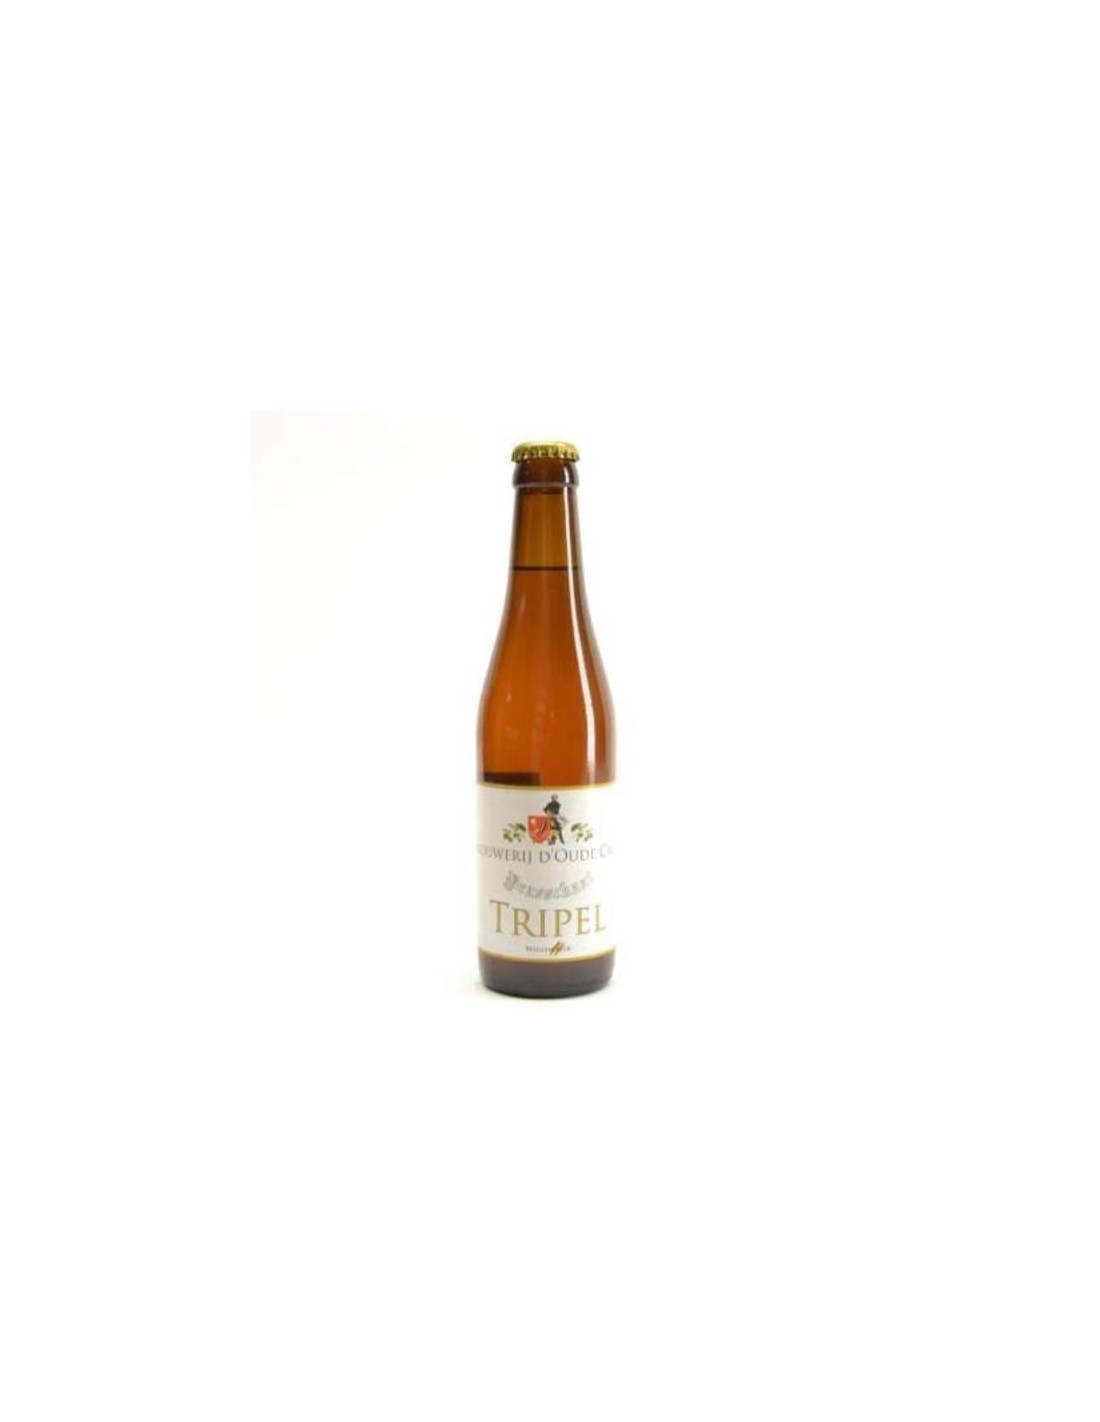 Bere bruna Brouwerij Oude Caert, 8% alc., 0.33L, Belgia alcooldiscount.ro